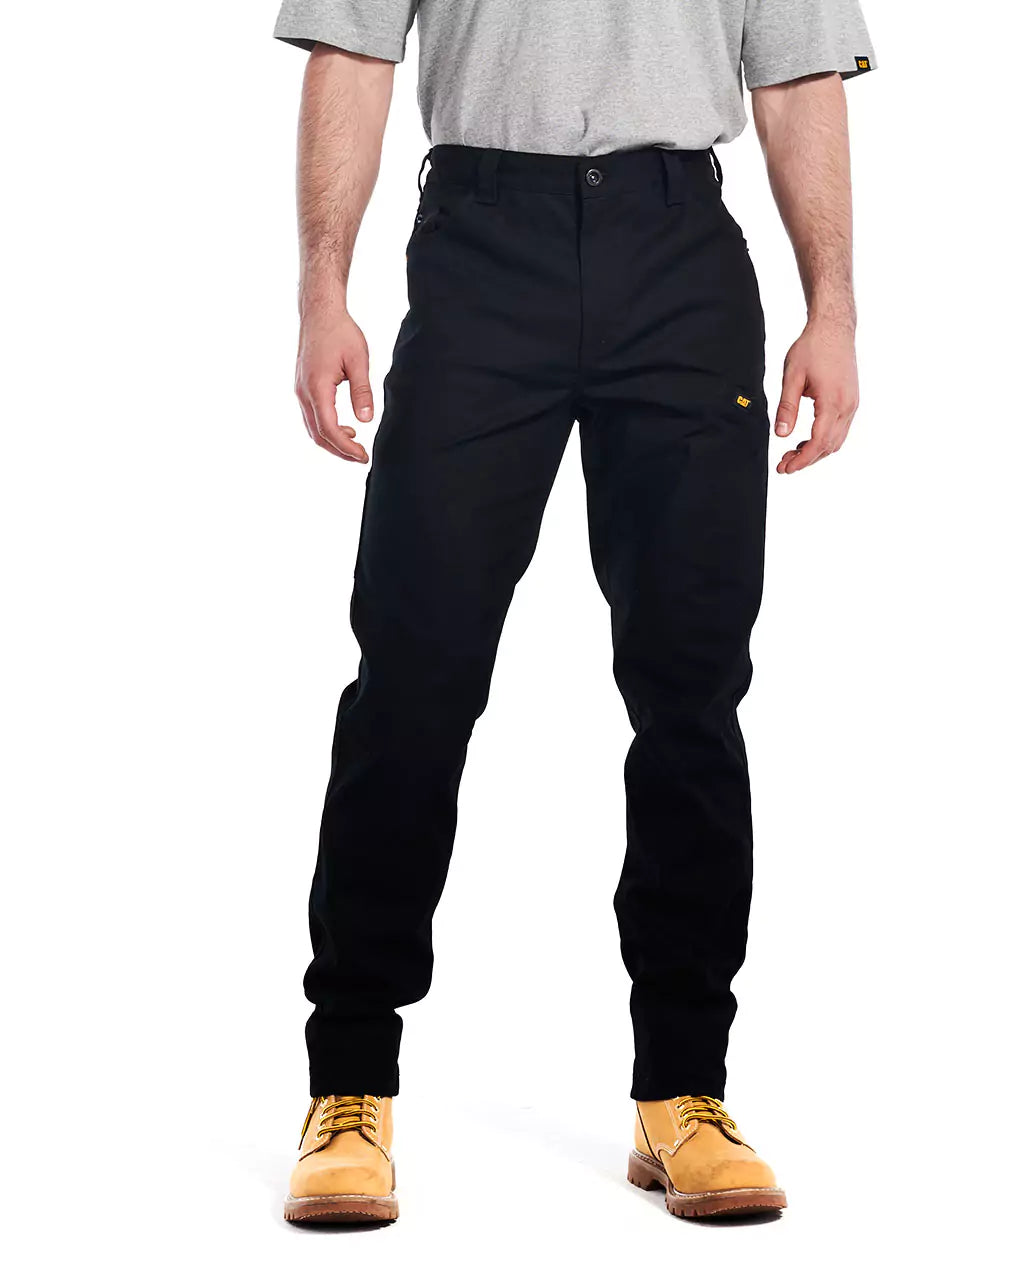 Buy 🥇 Men's Stretch Pants & Stretch Work Pants